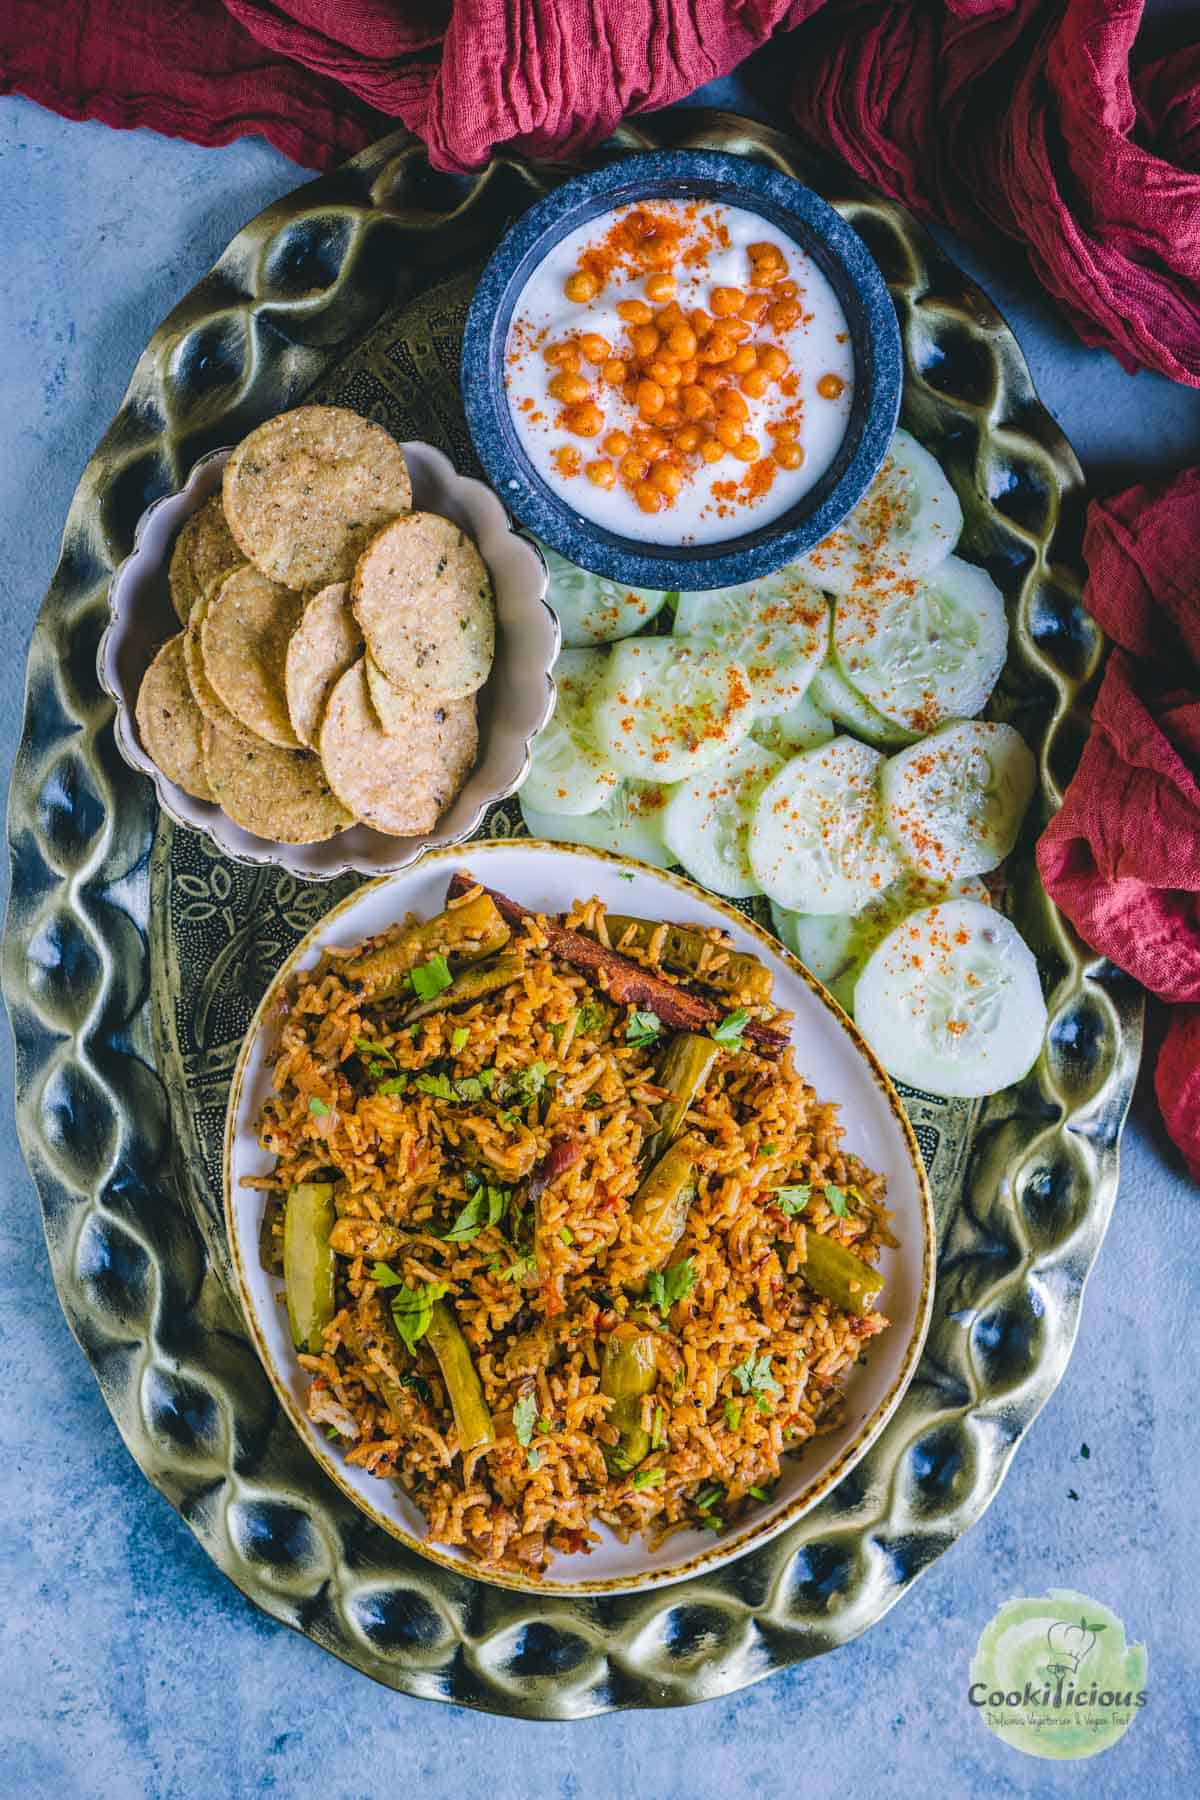 Tendli Masala Bhaat served in a platter along with salad, raita and papad